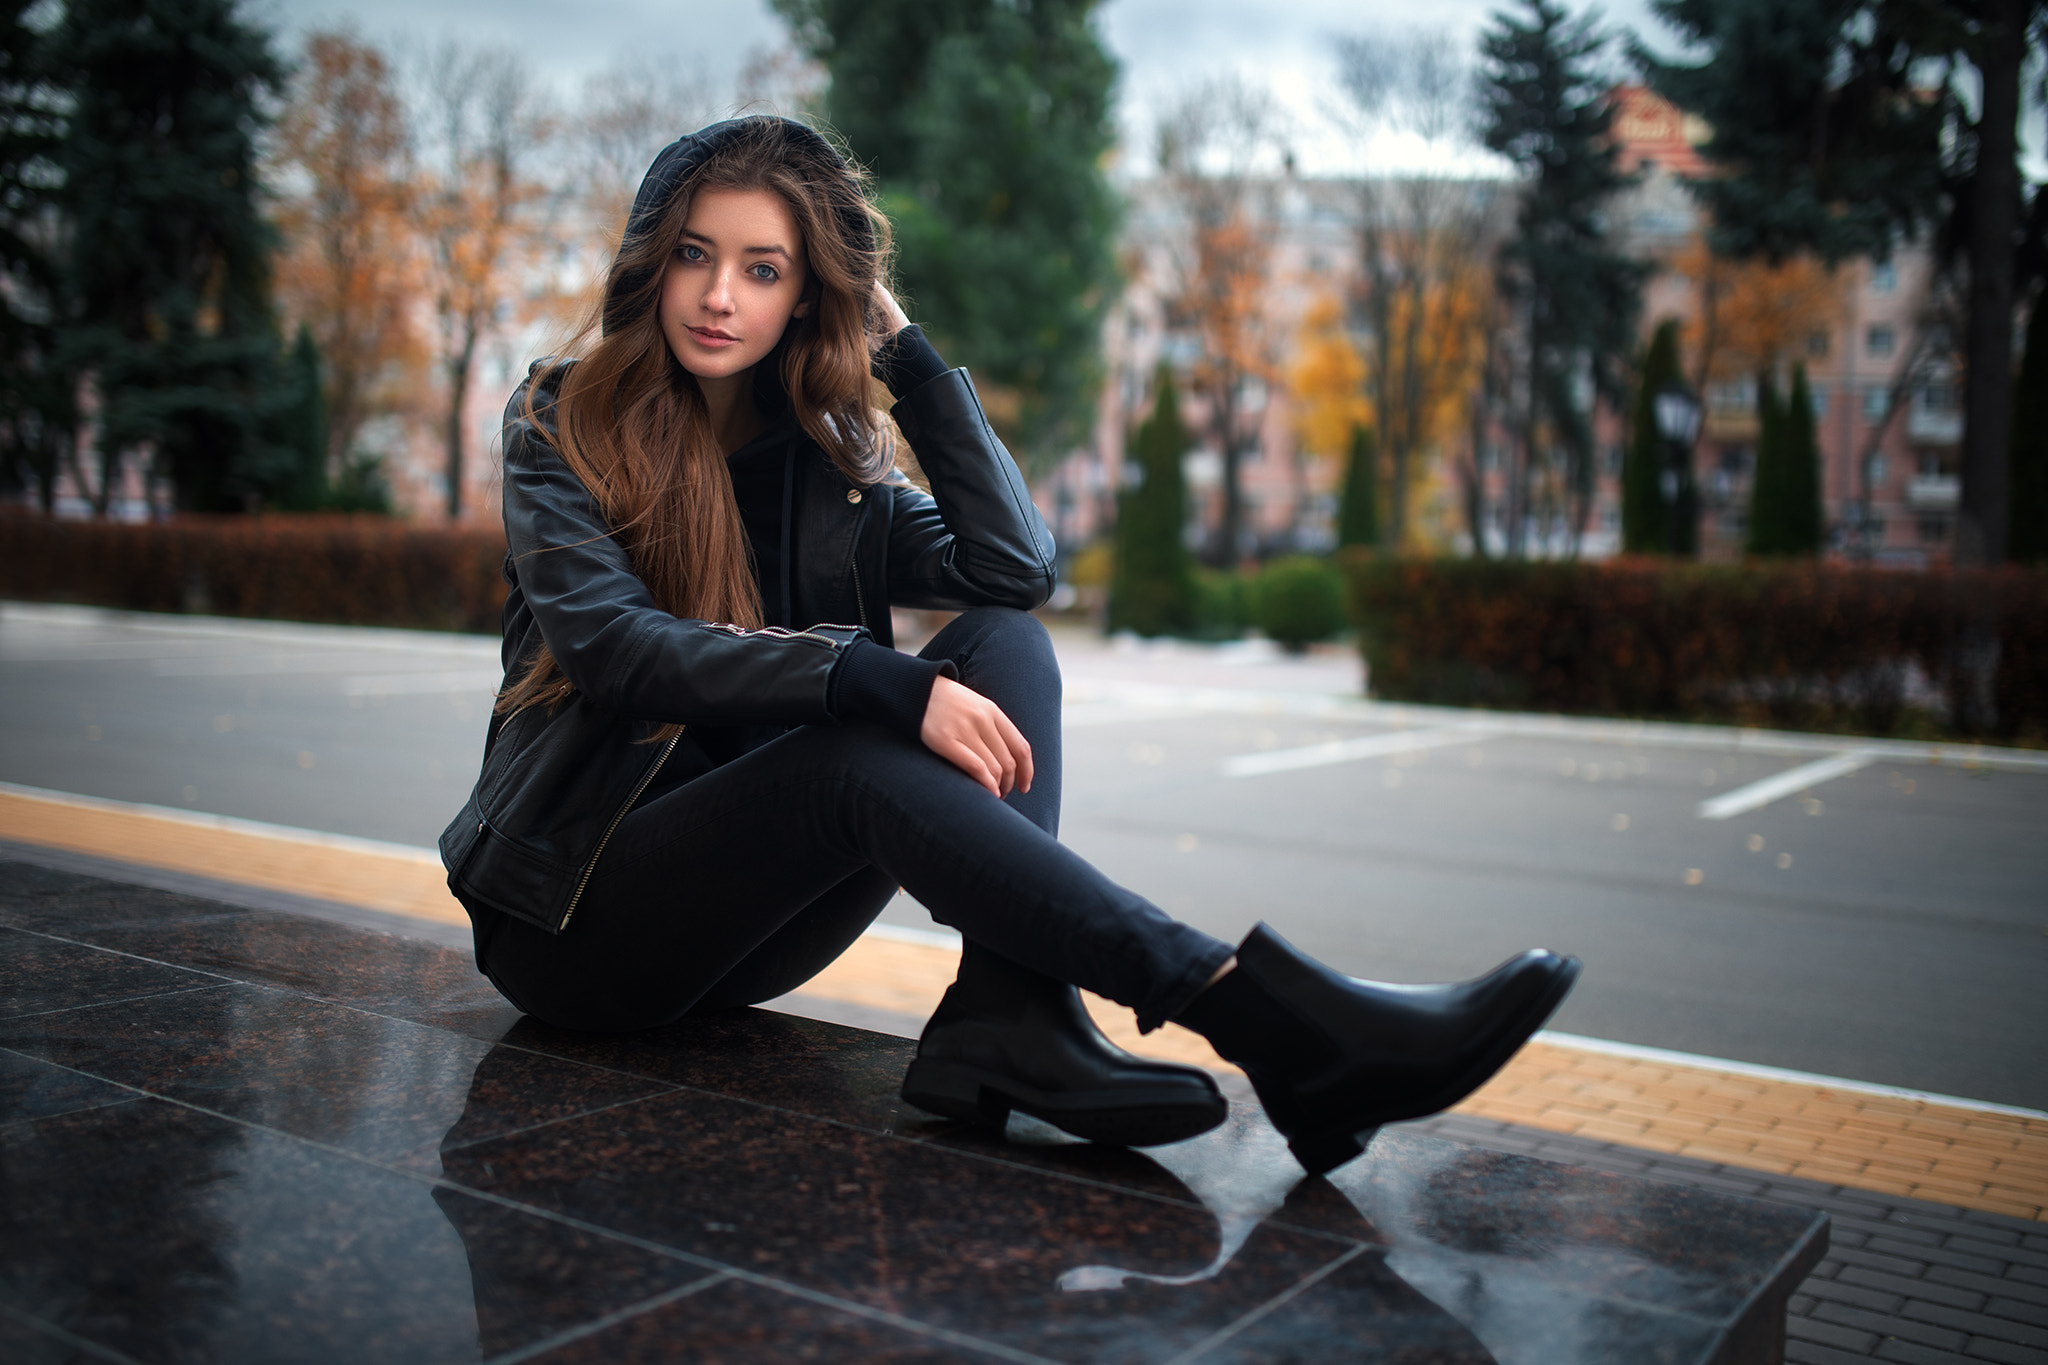 Dmitry Shulgin Women Hoods Brunette Long Hair Jacket Black Clothing Jeans Boots Reflection Outdoors  2048x1365